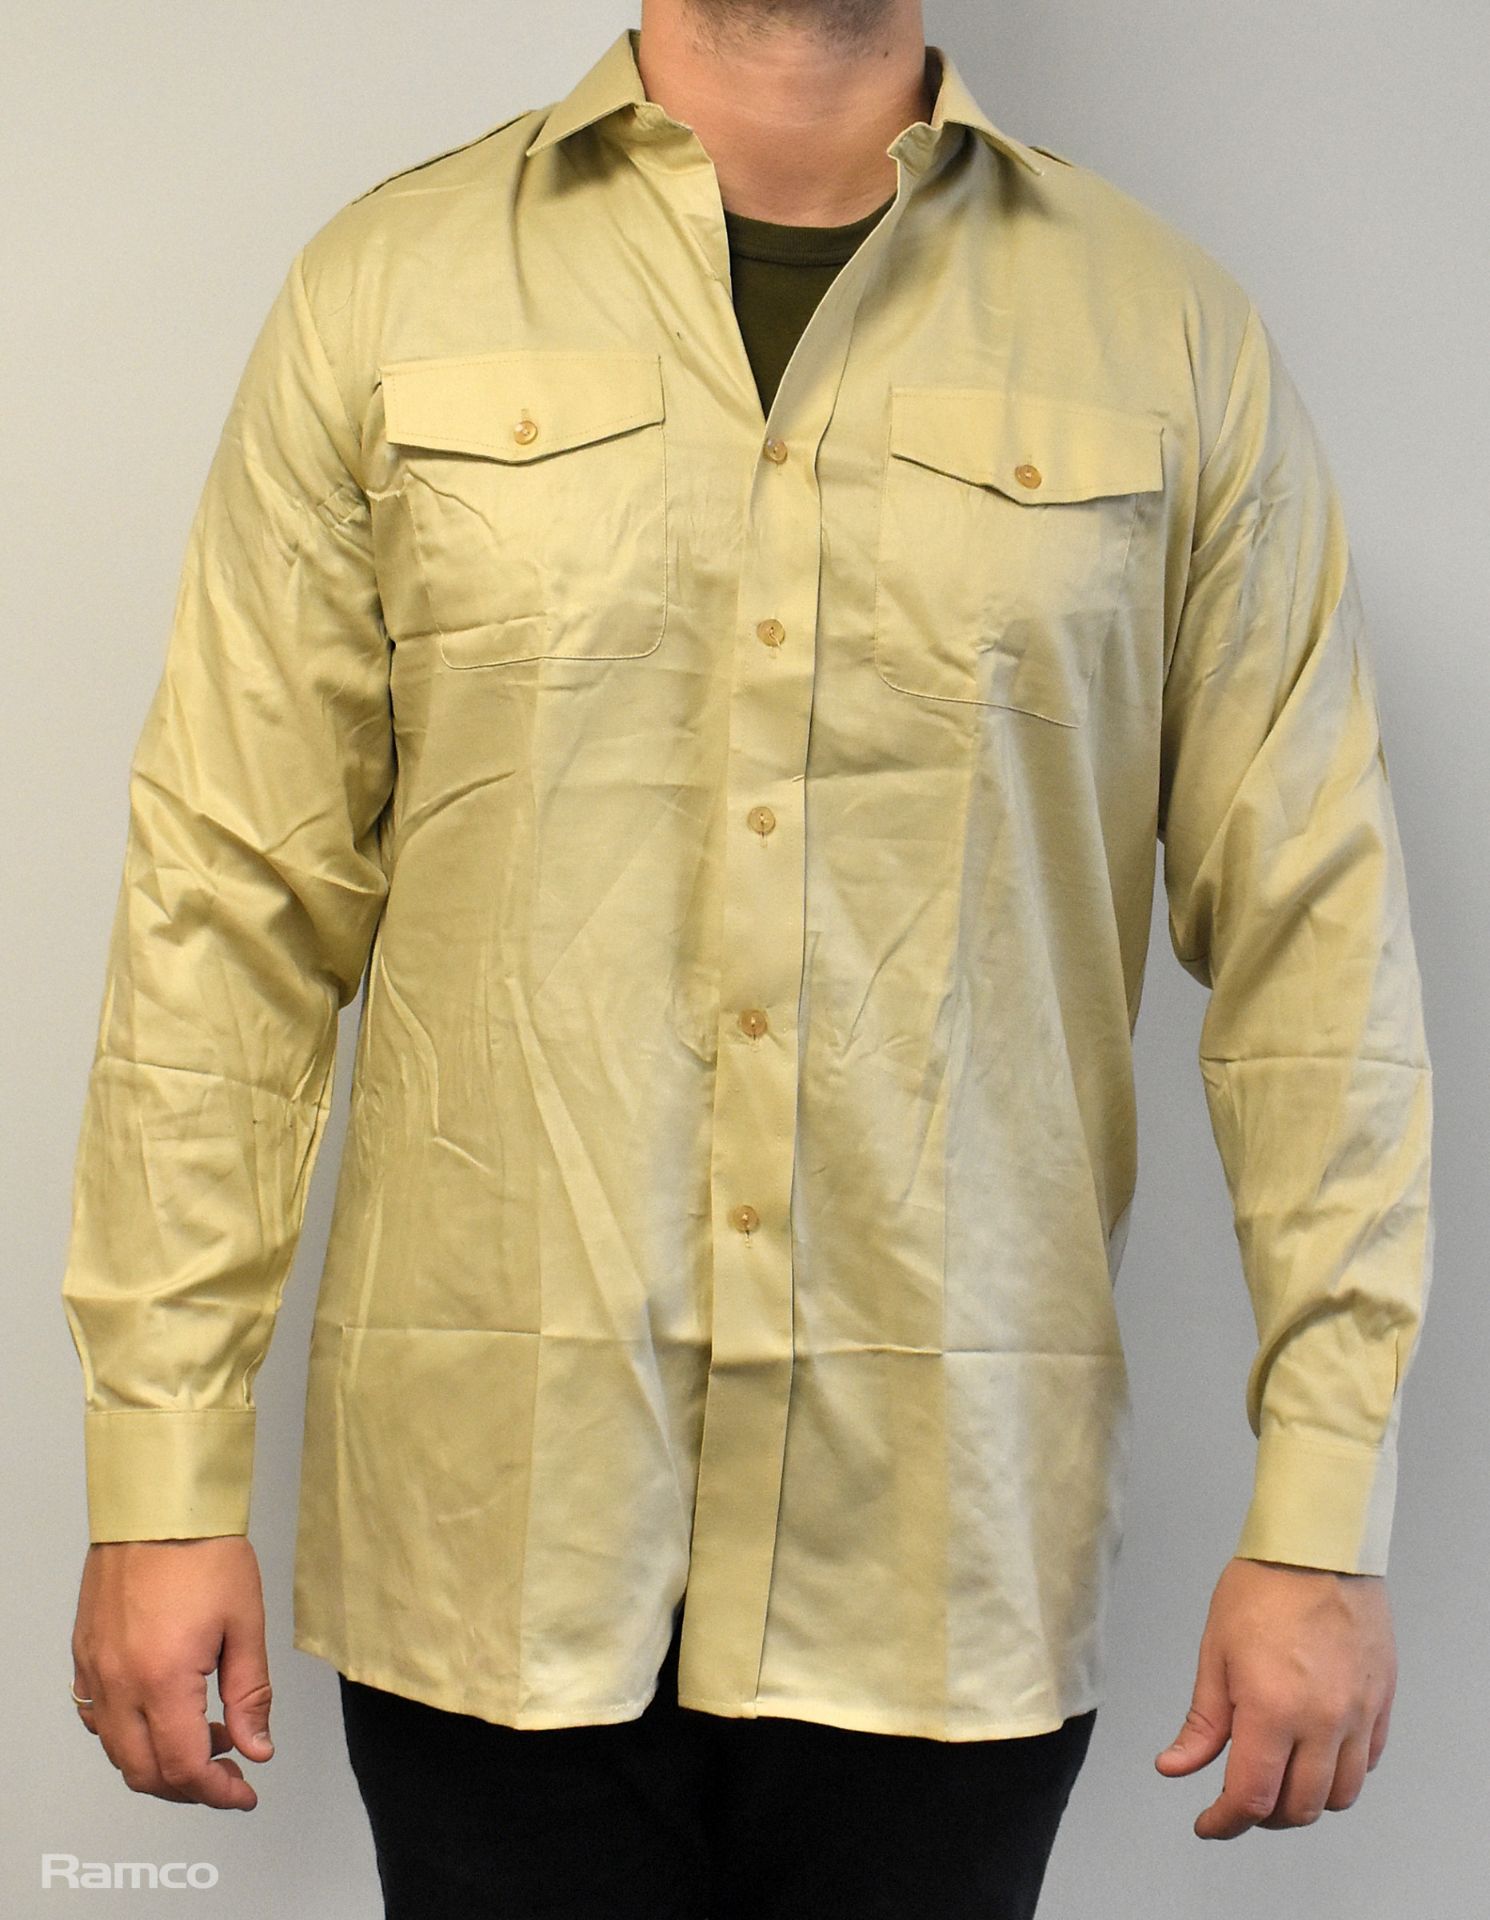 90x British Army Fawn shirts long sleeve - mixed grades and sizes